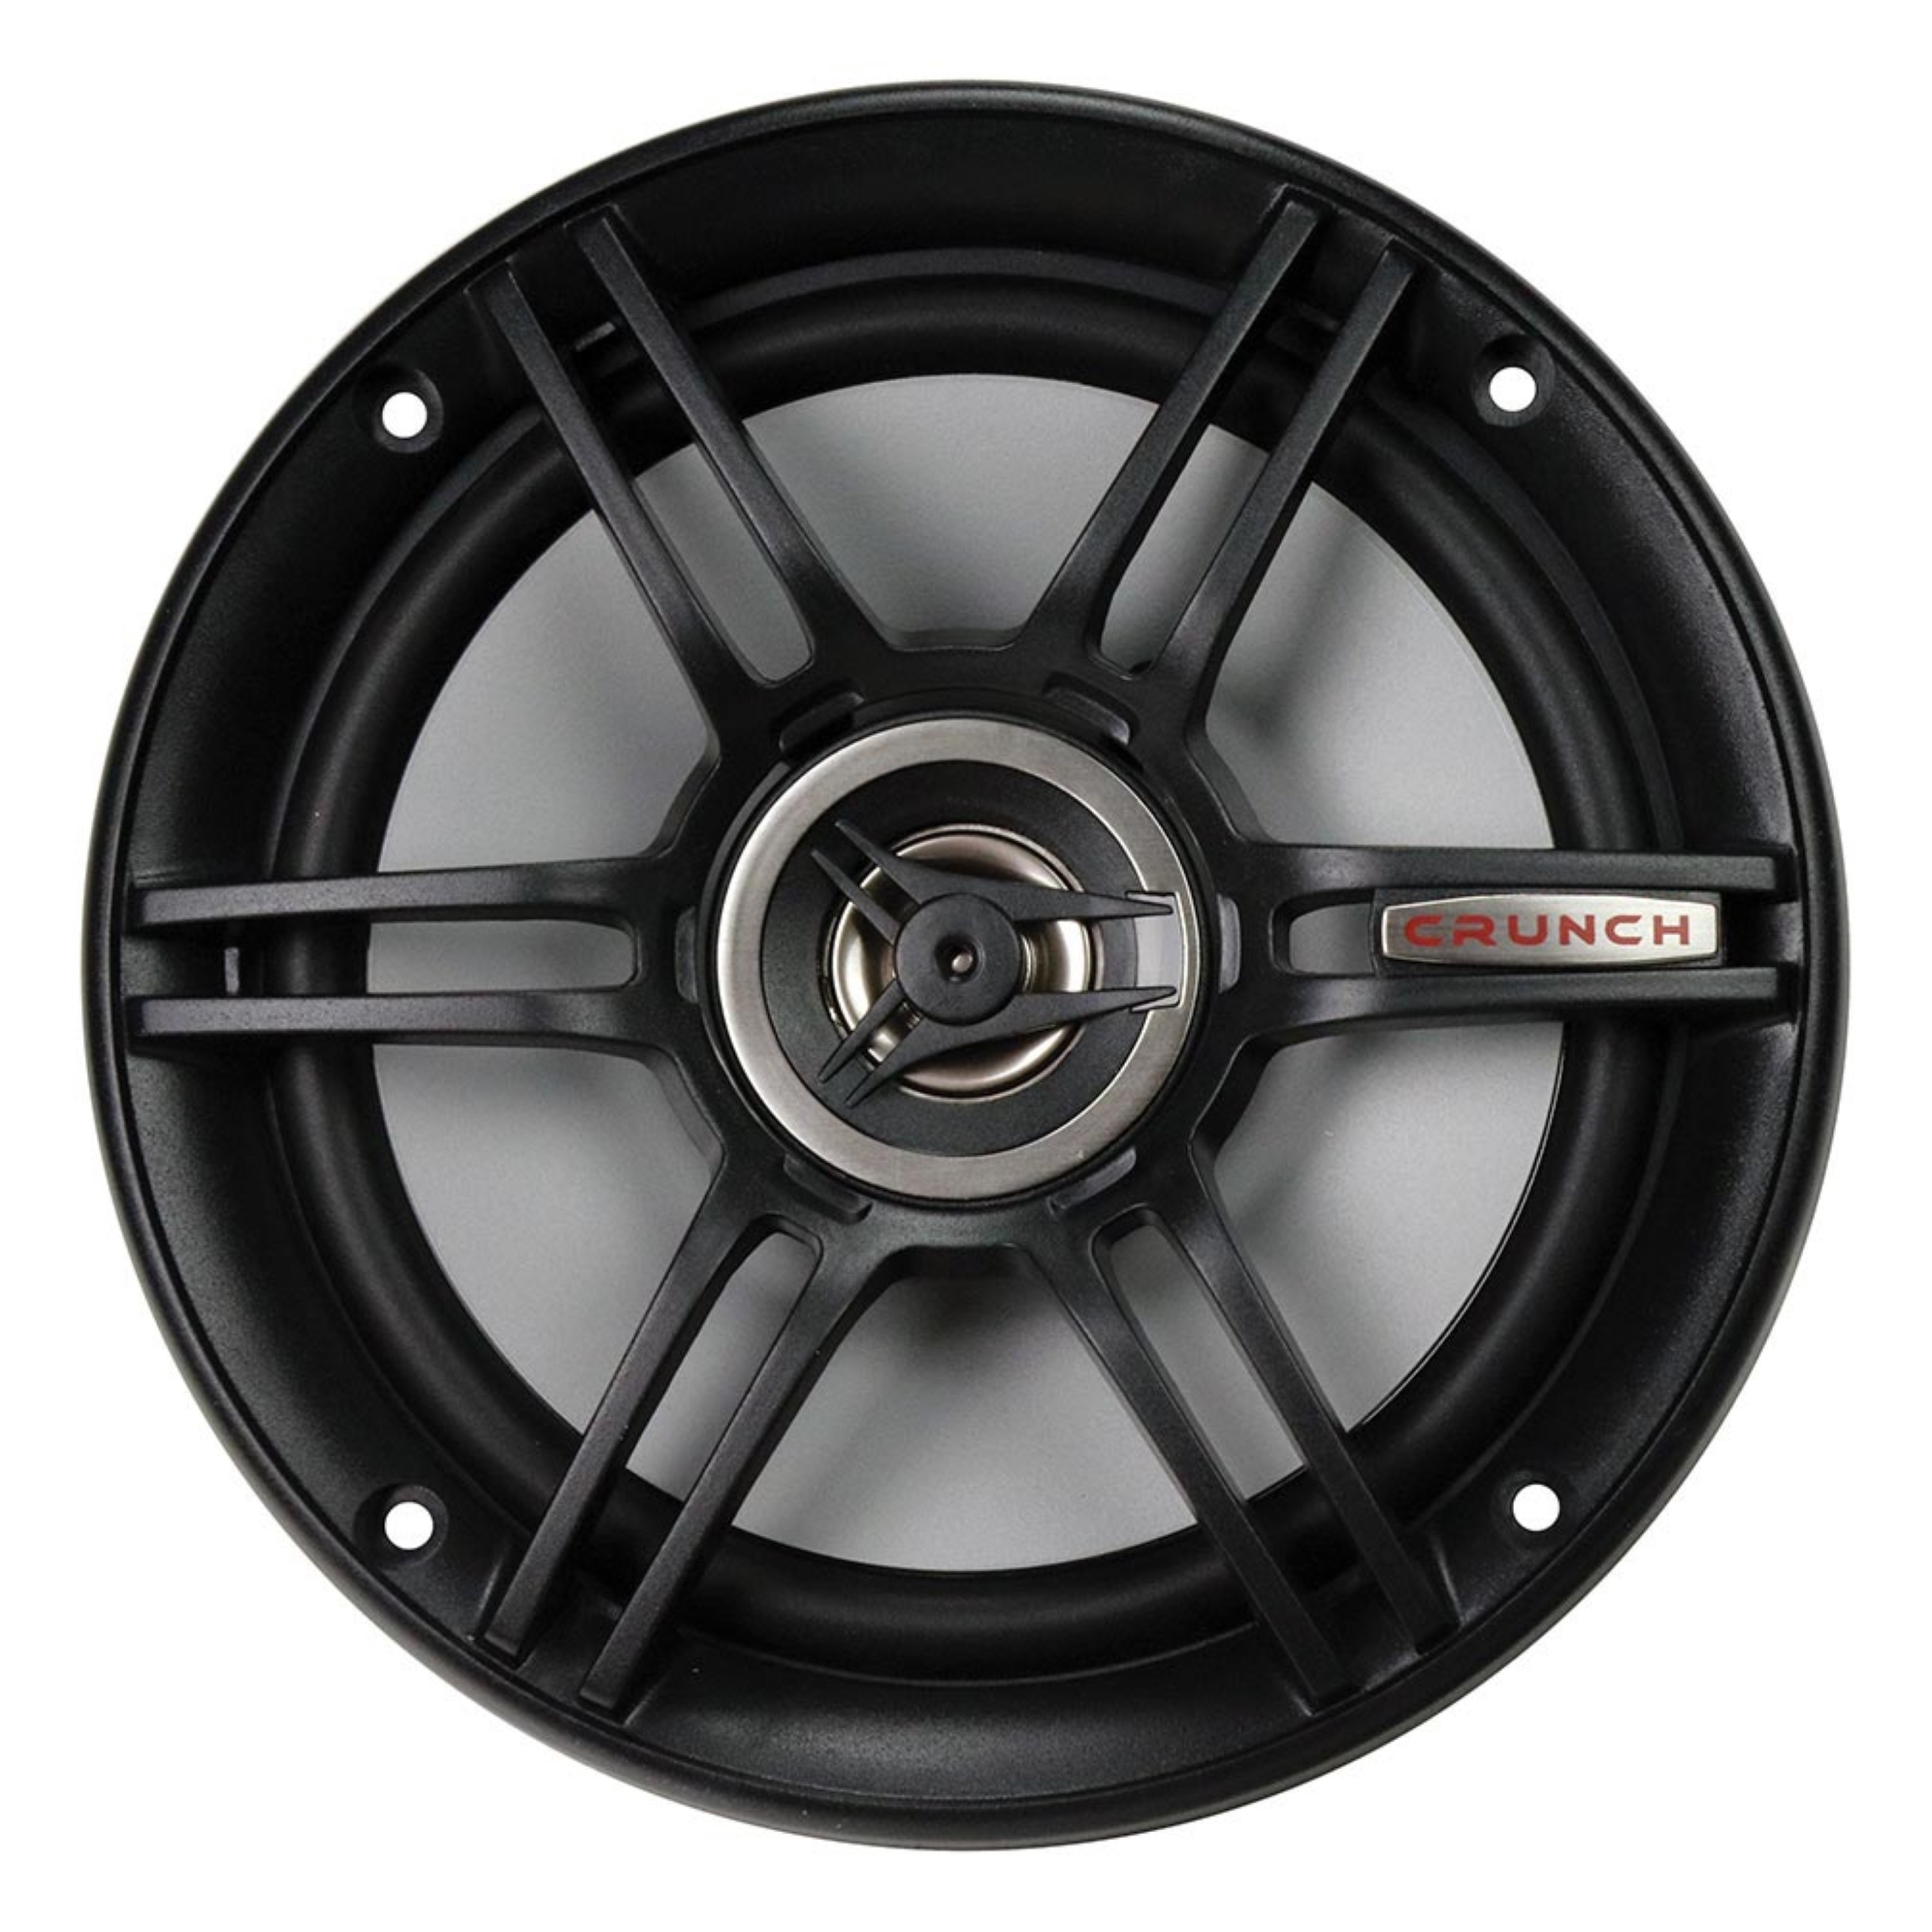 Crunch CS65CXS Full Range 3-Way Shallow Mount Car Speaker, 6.5 , Black